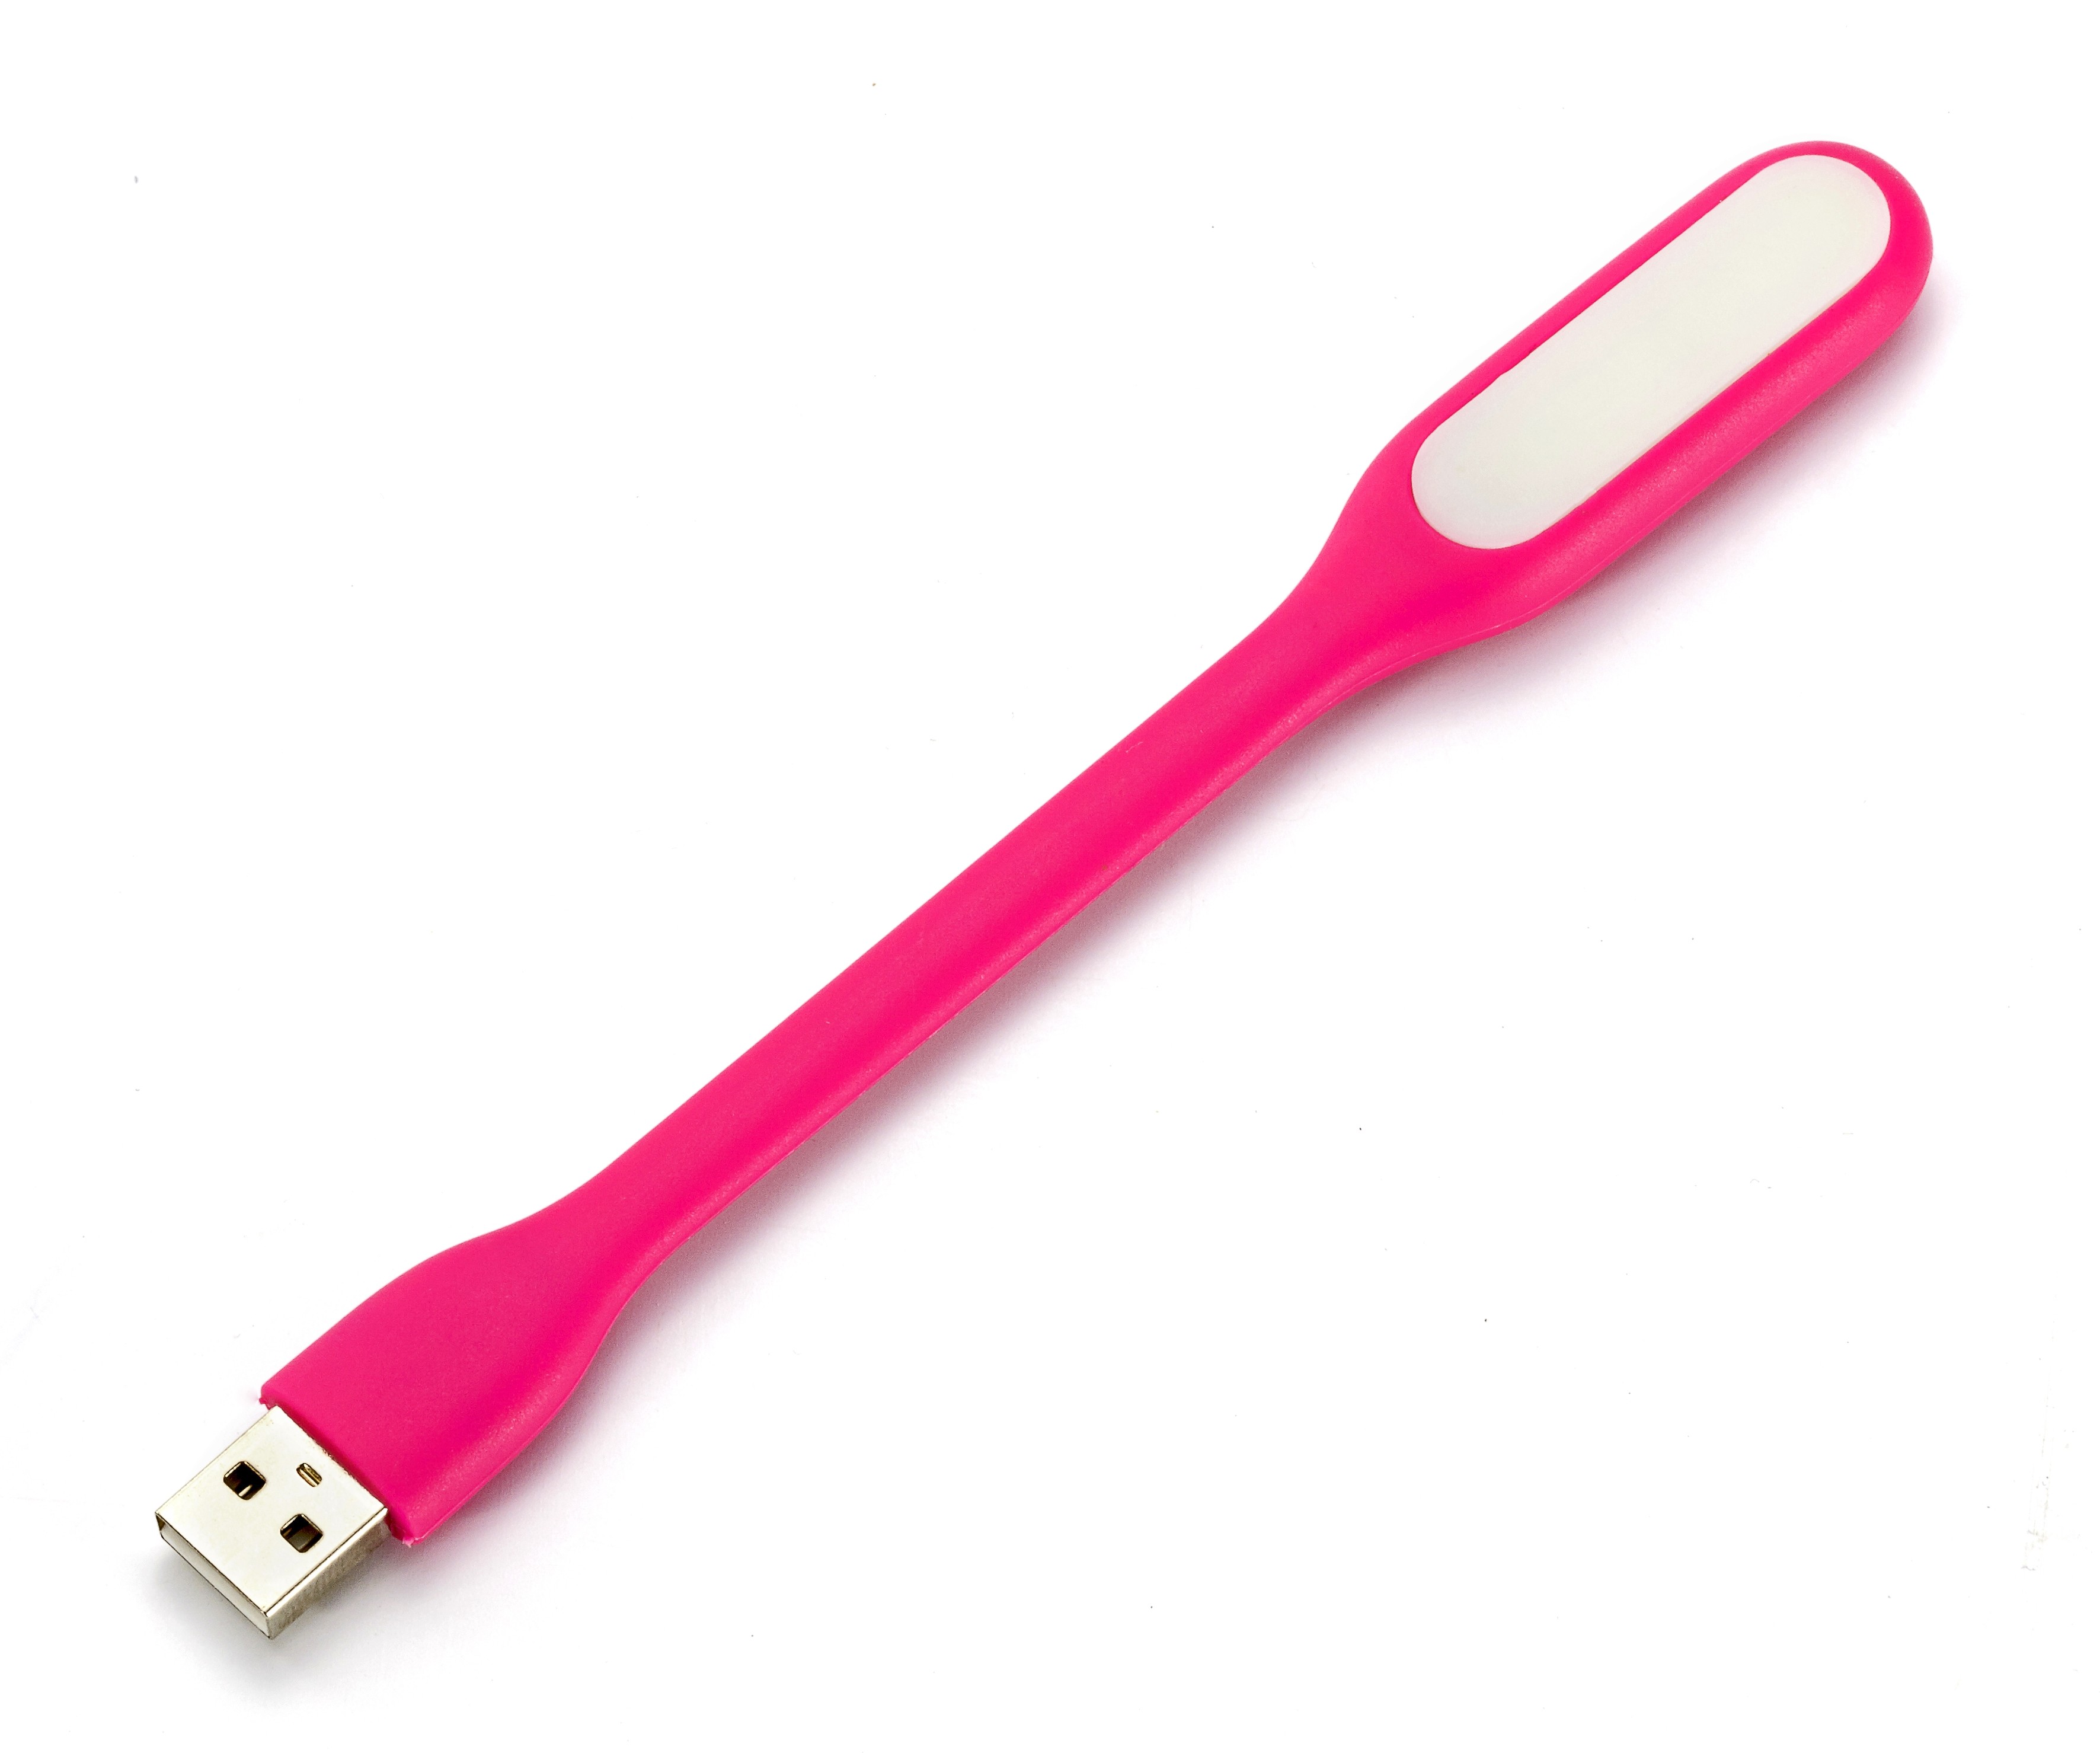 Лампа LED -фонарик (USB) для компьютера,розовый